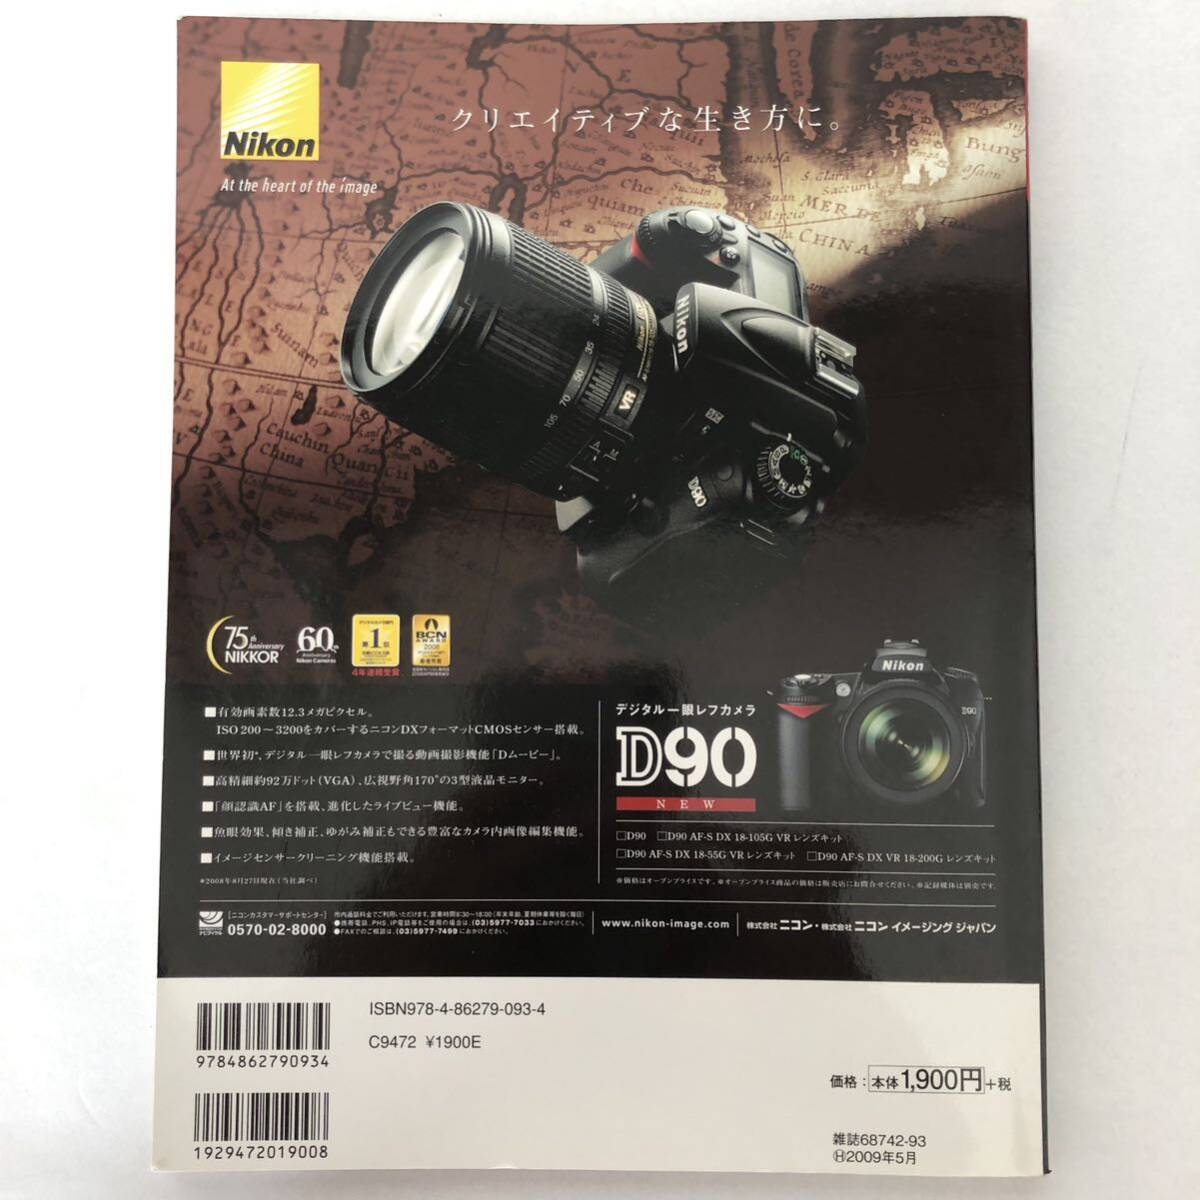 Nikon ニコン D90 オーナーズBOOK (Motor Magazine Mook) カメラマンシリ－ズ 取扱説明書 [送料無料] マニュアル 使用説明書 取説 #M1061_画像2